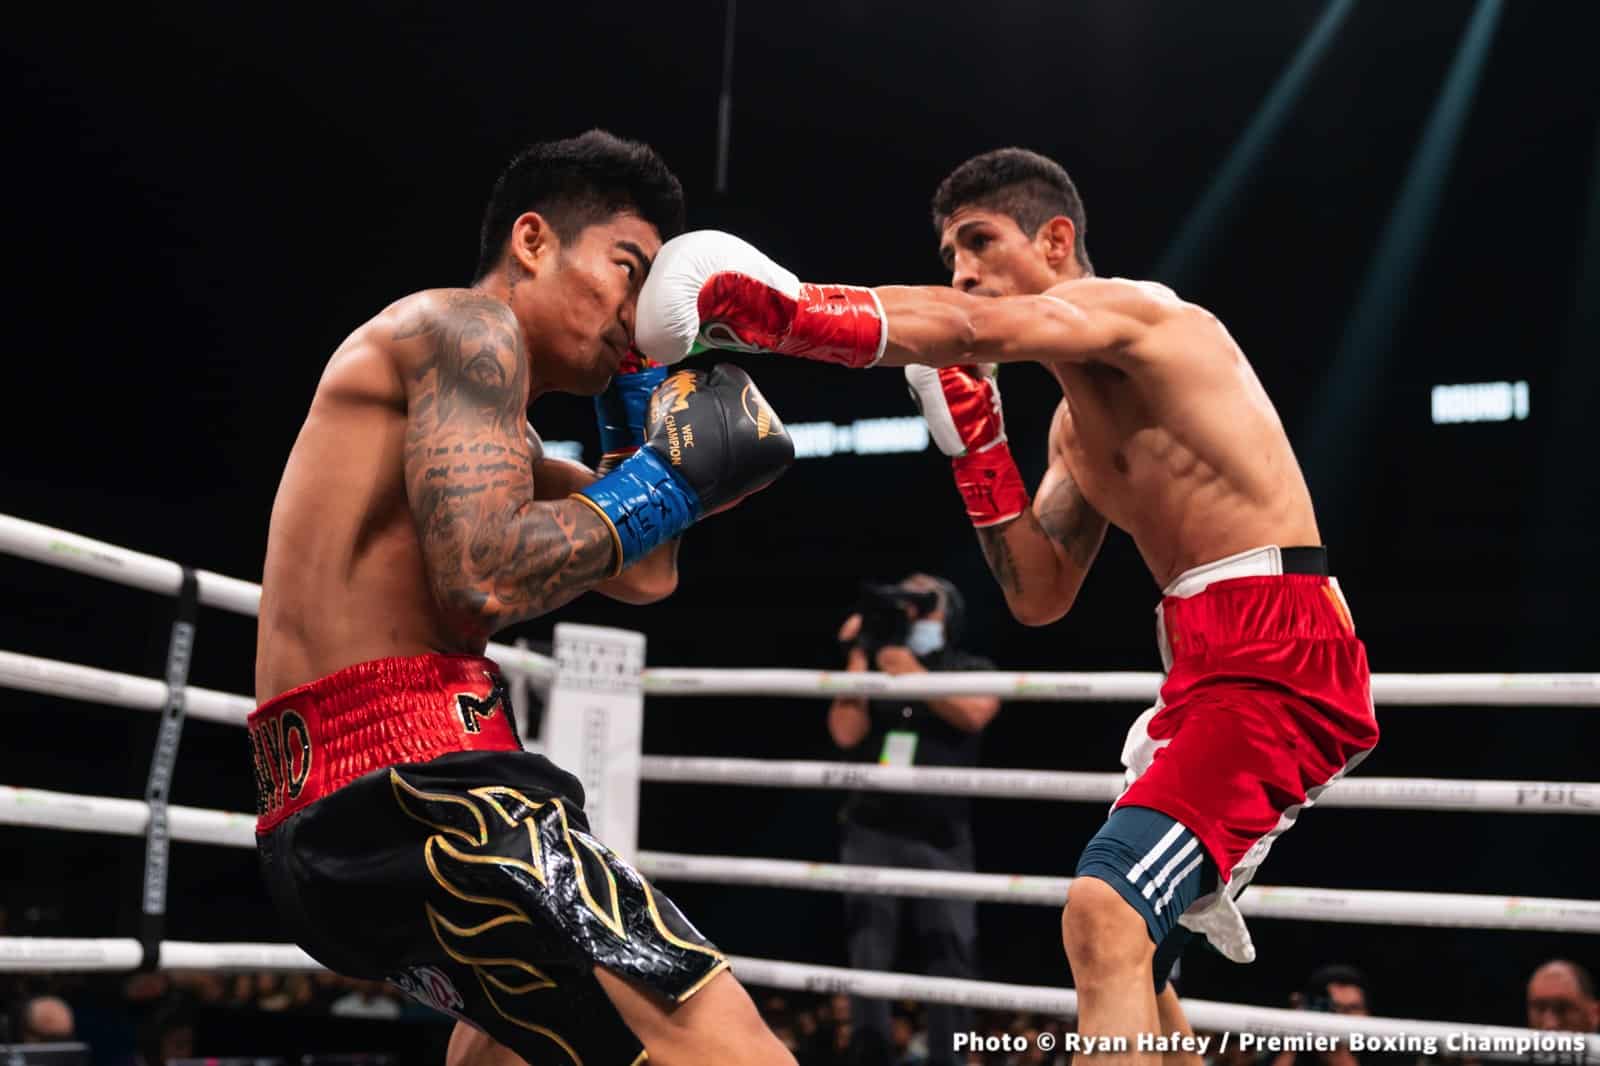 Leo Santa Cruz boxing image / photo